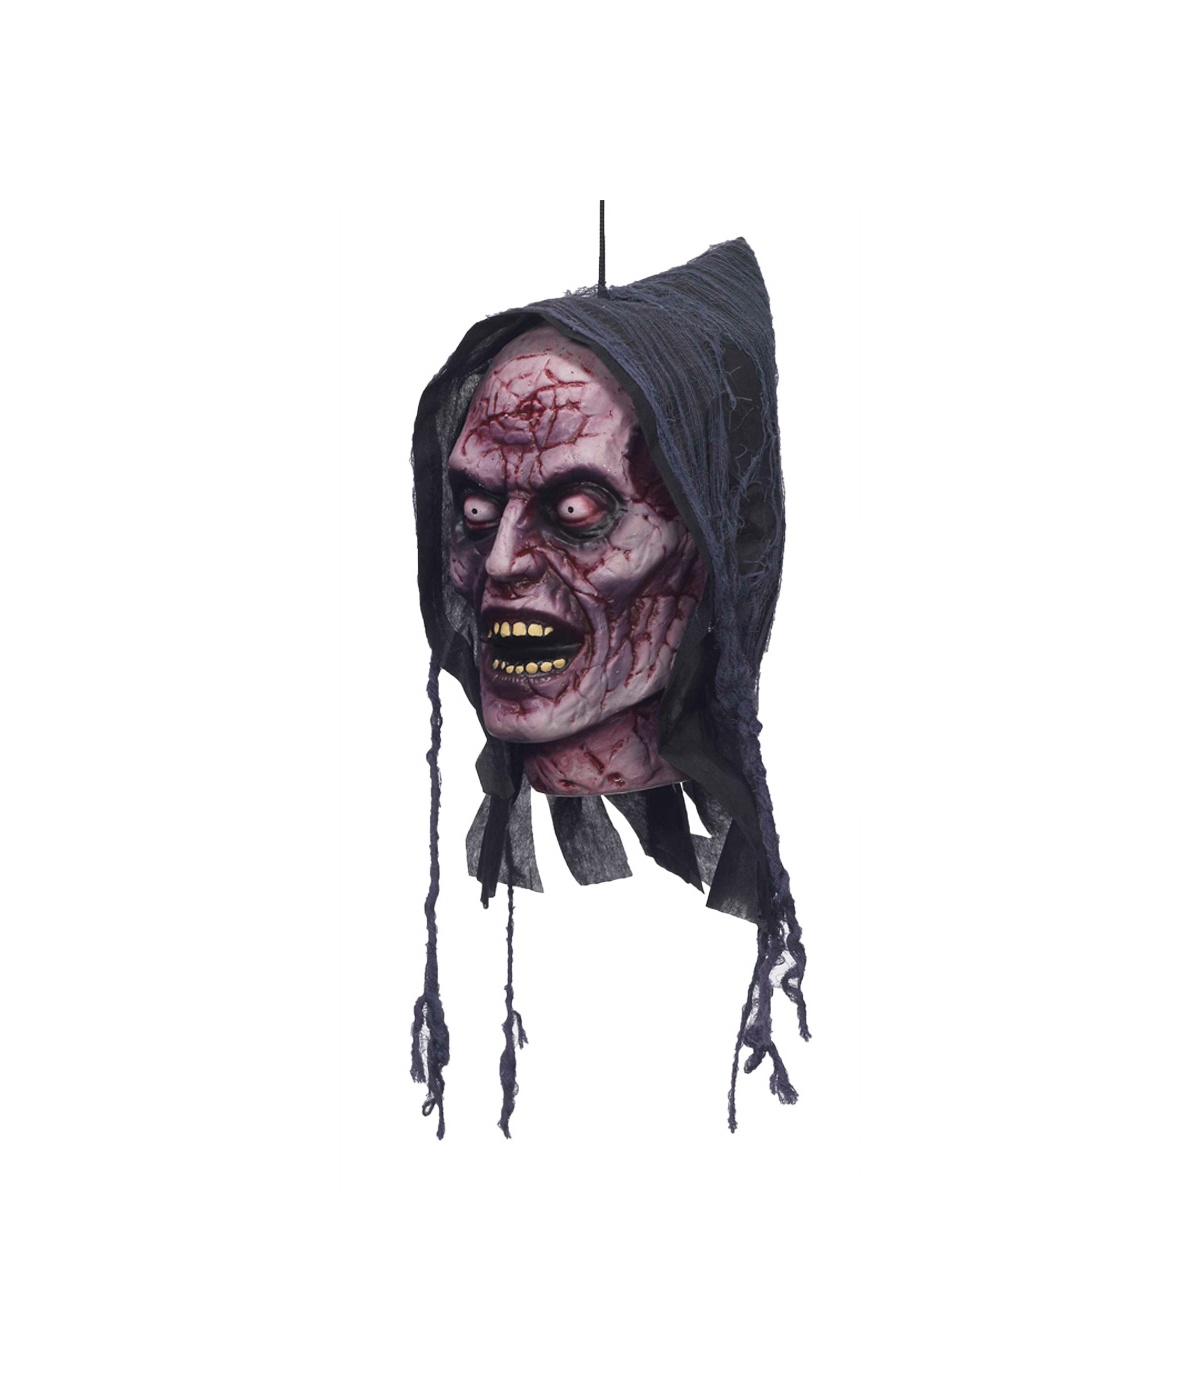  Beheaded Ghoul Head Halloween Prop